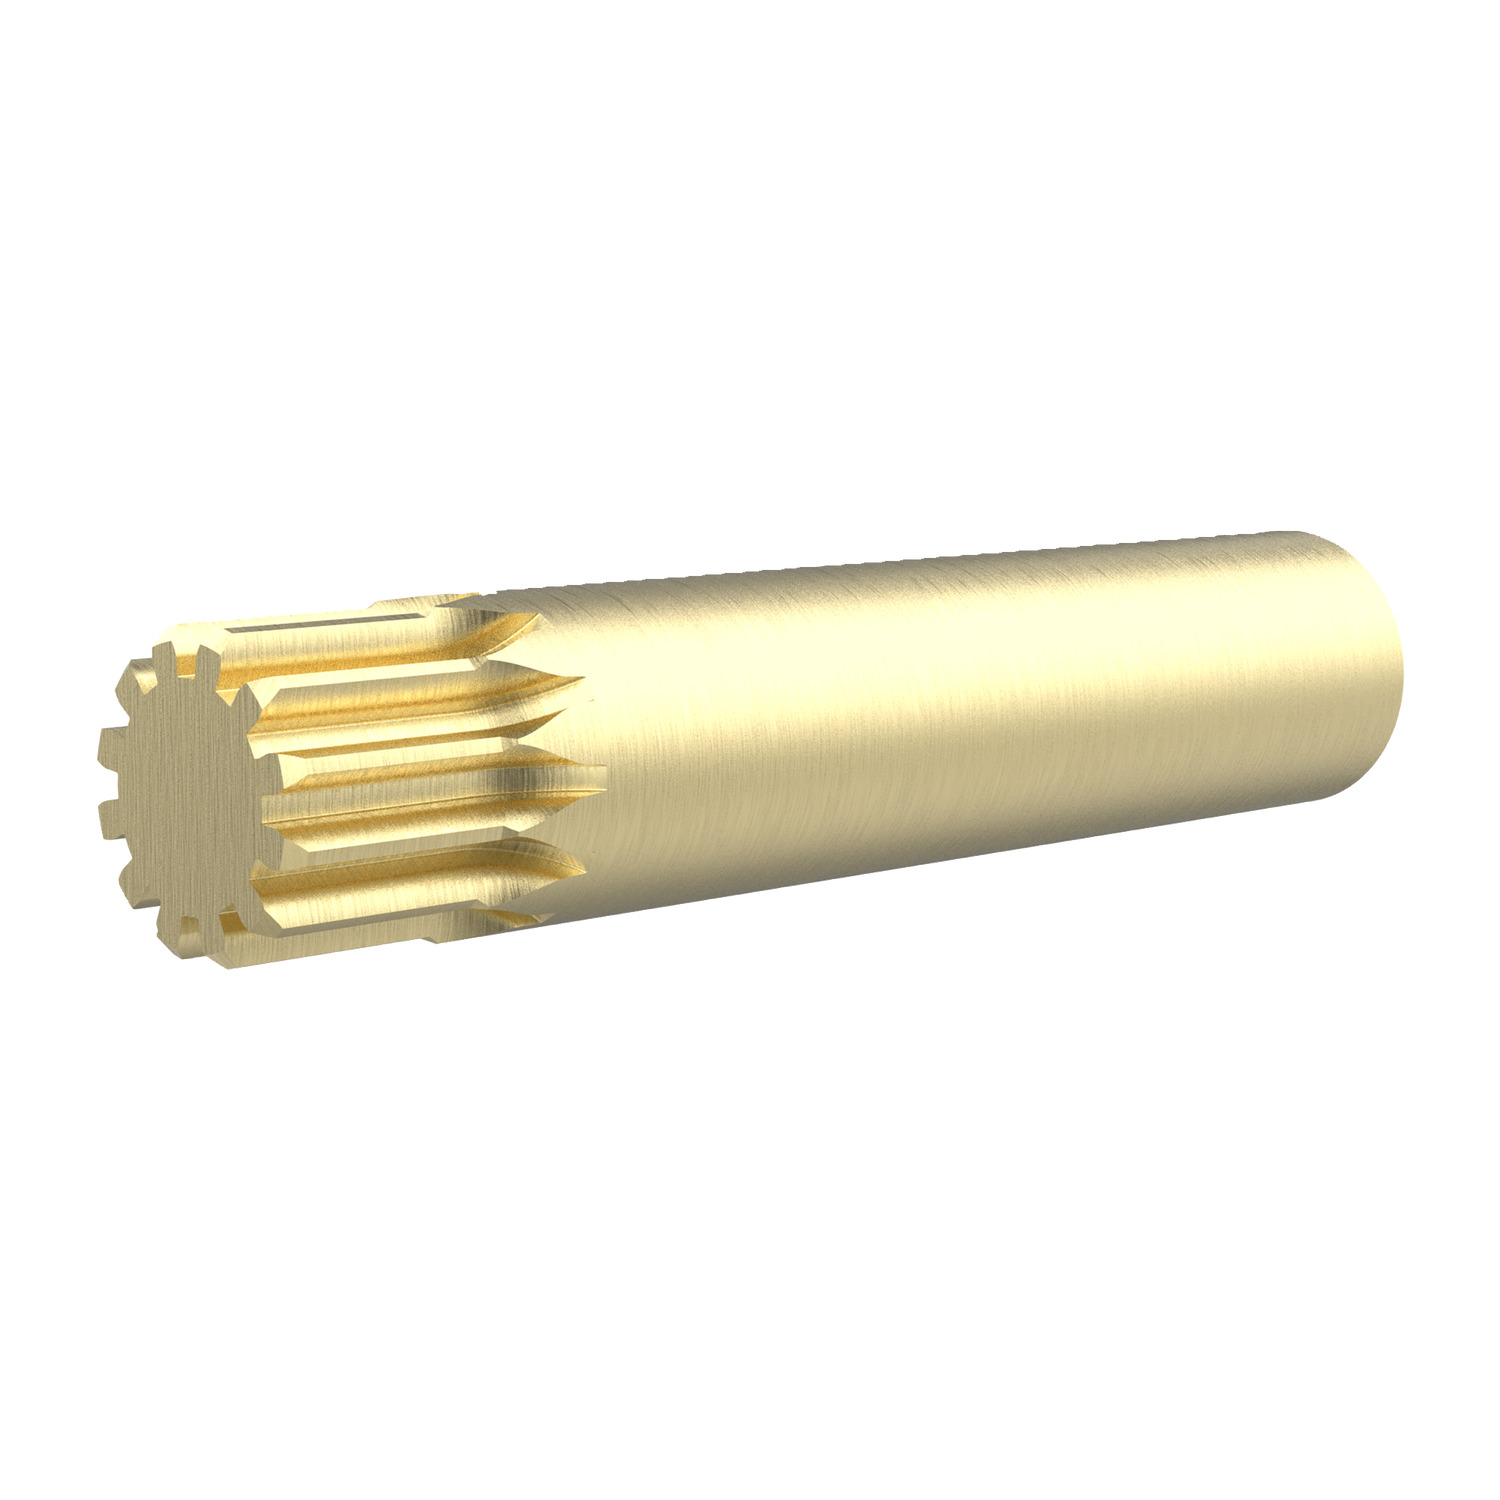 Product R5130, Spur Gears - Module 0.75 - Brass brass - 10-12 teeth / 